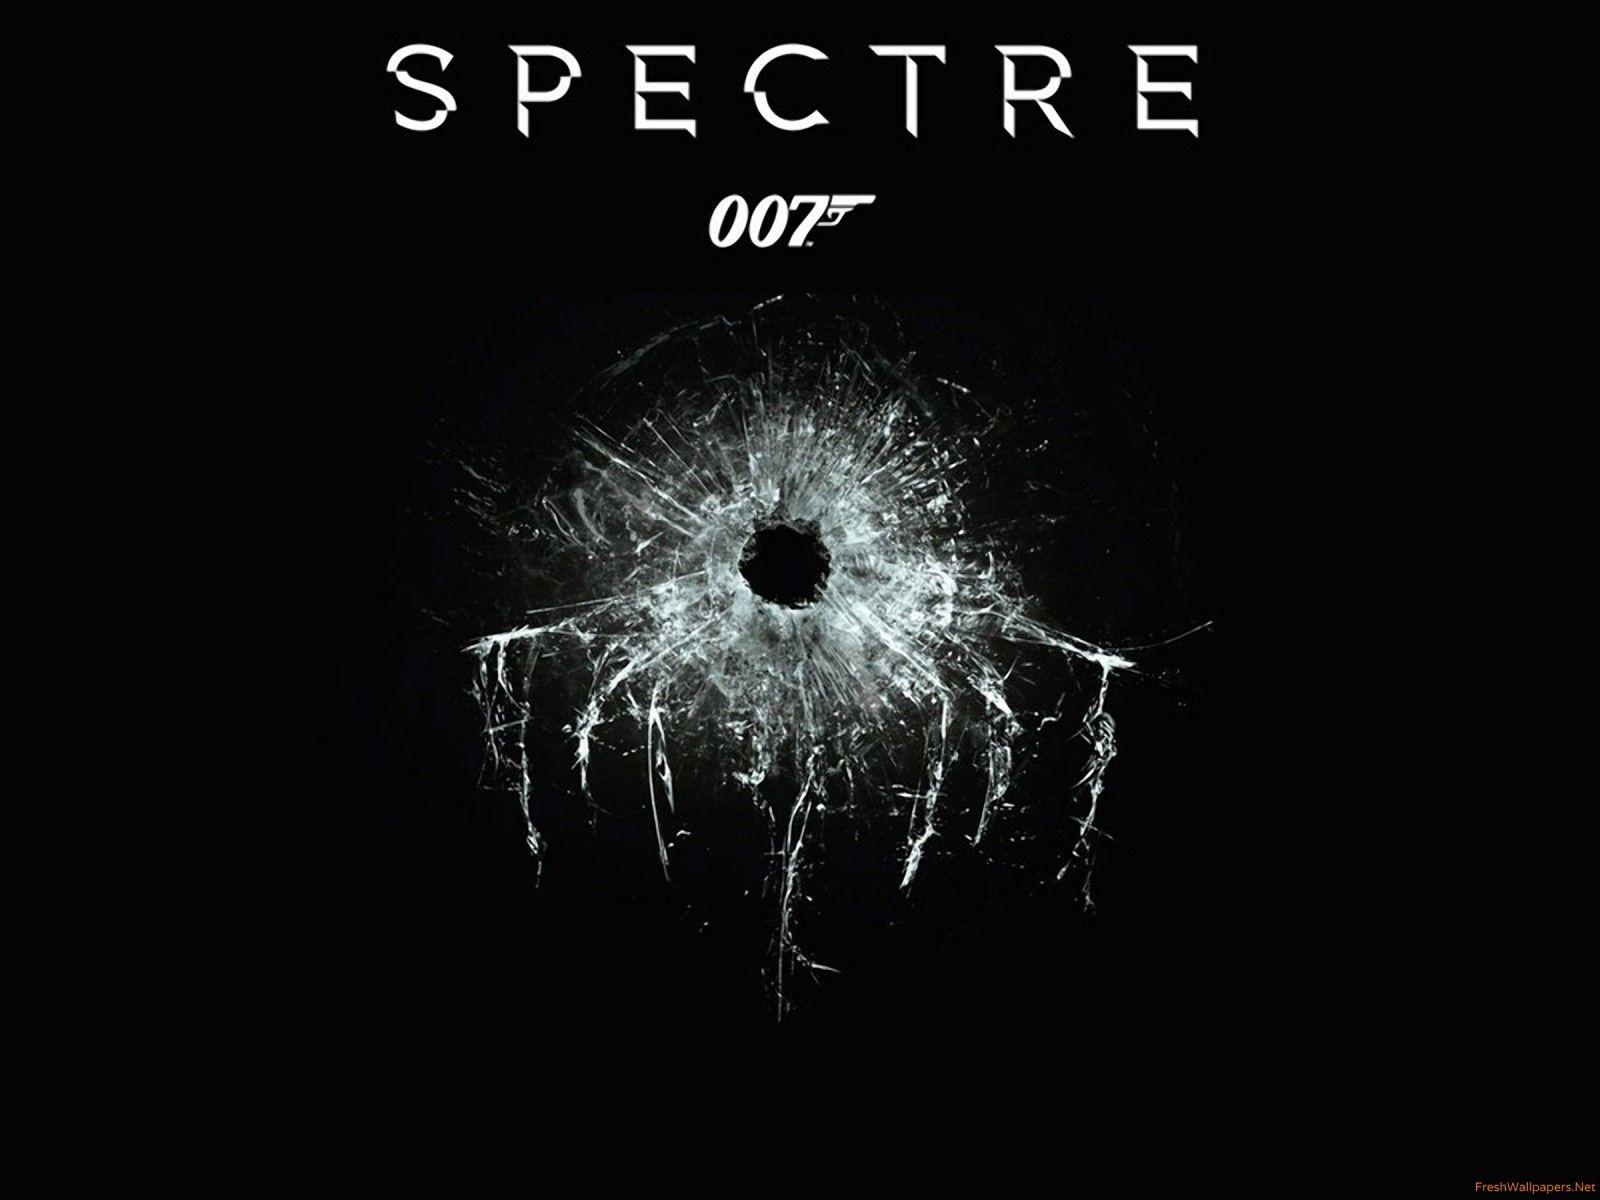 Spectre 2015 Poster James Bond 007 wallpaper